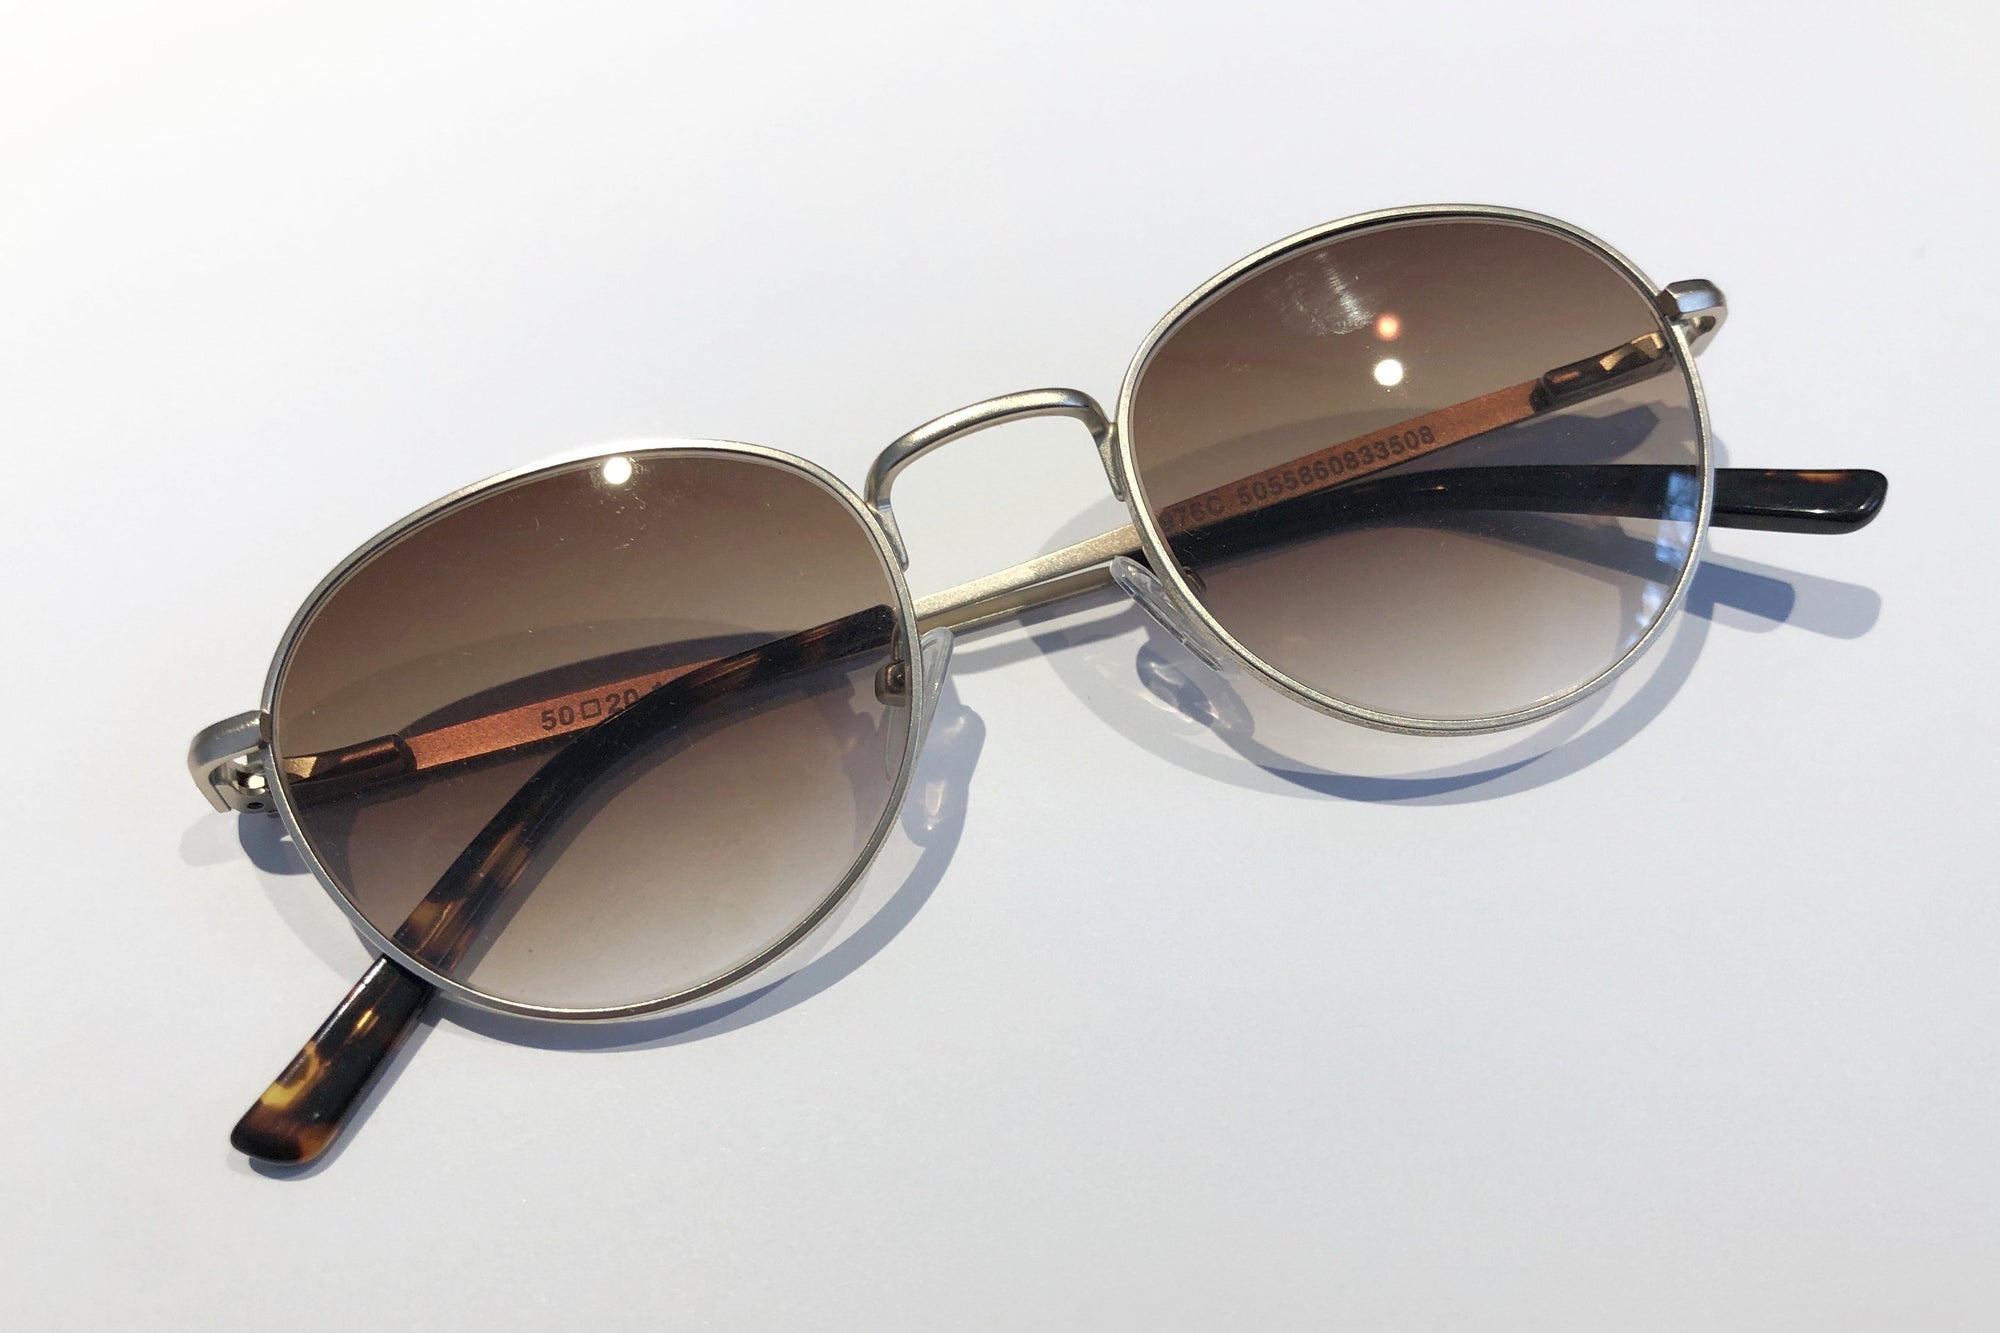 Lese-/Sonnenbrille "Round" von Lese-Brille Andrea - Réjane Rosenberger Design